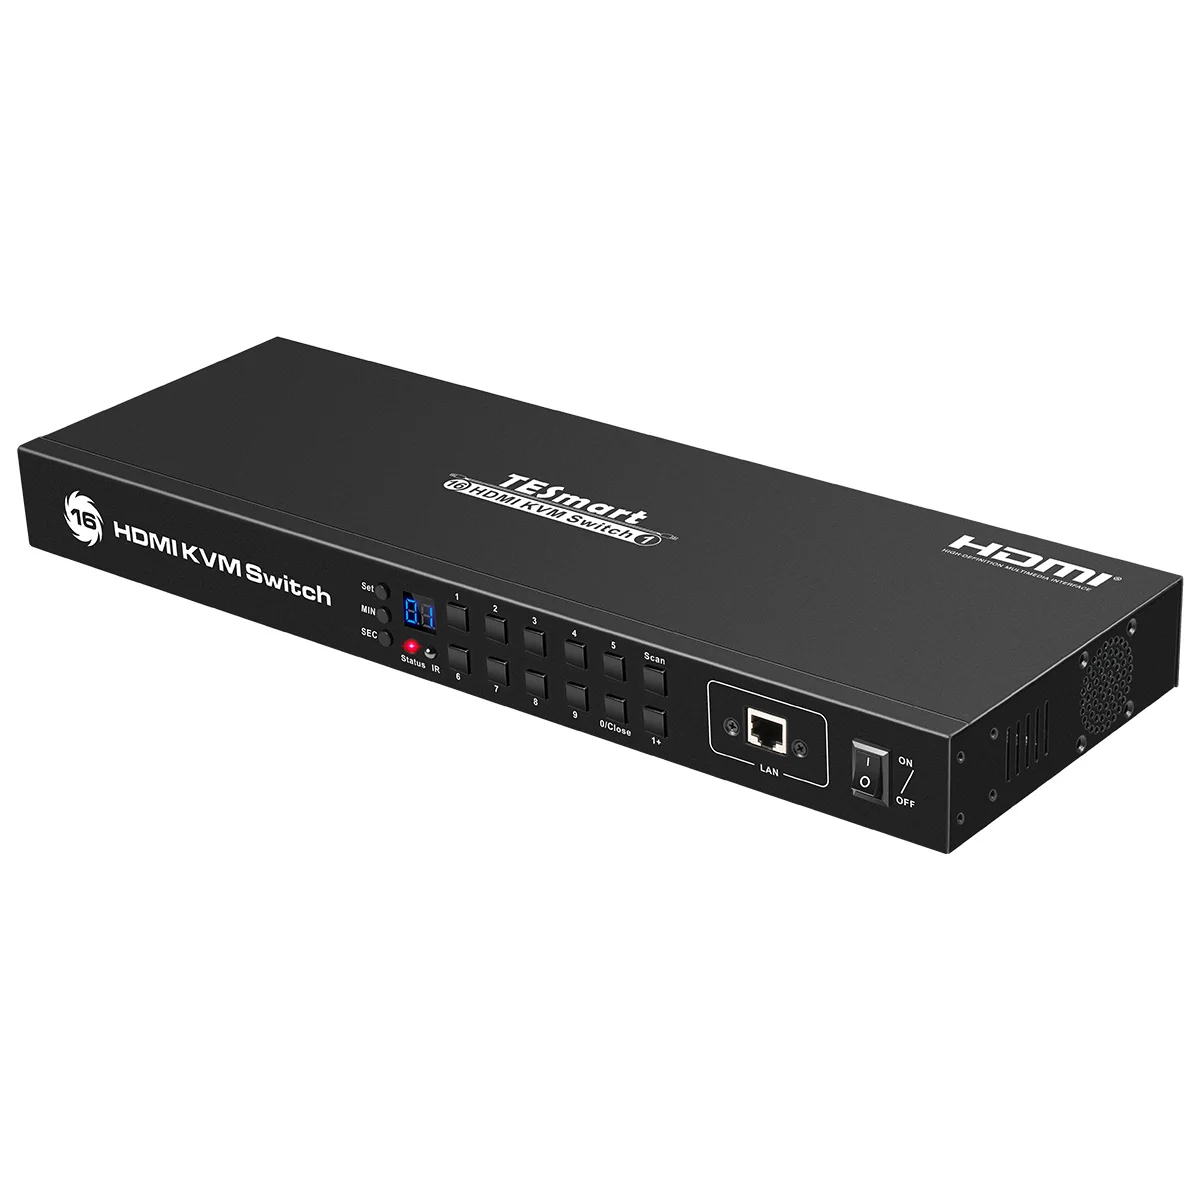 
TESmart USB2.0 16 Port HDMI IP KVM Switch support keyboard hotkeys control  (60697755454)